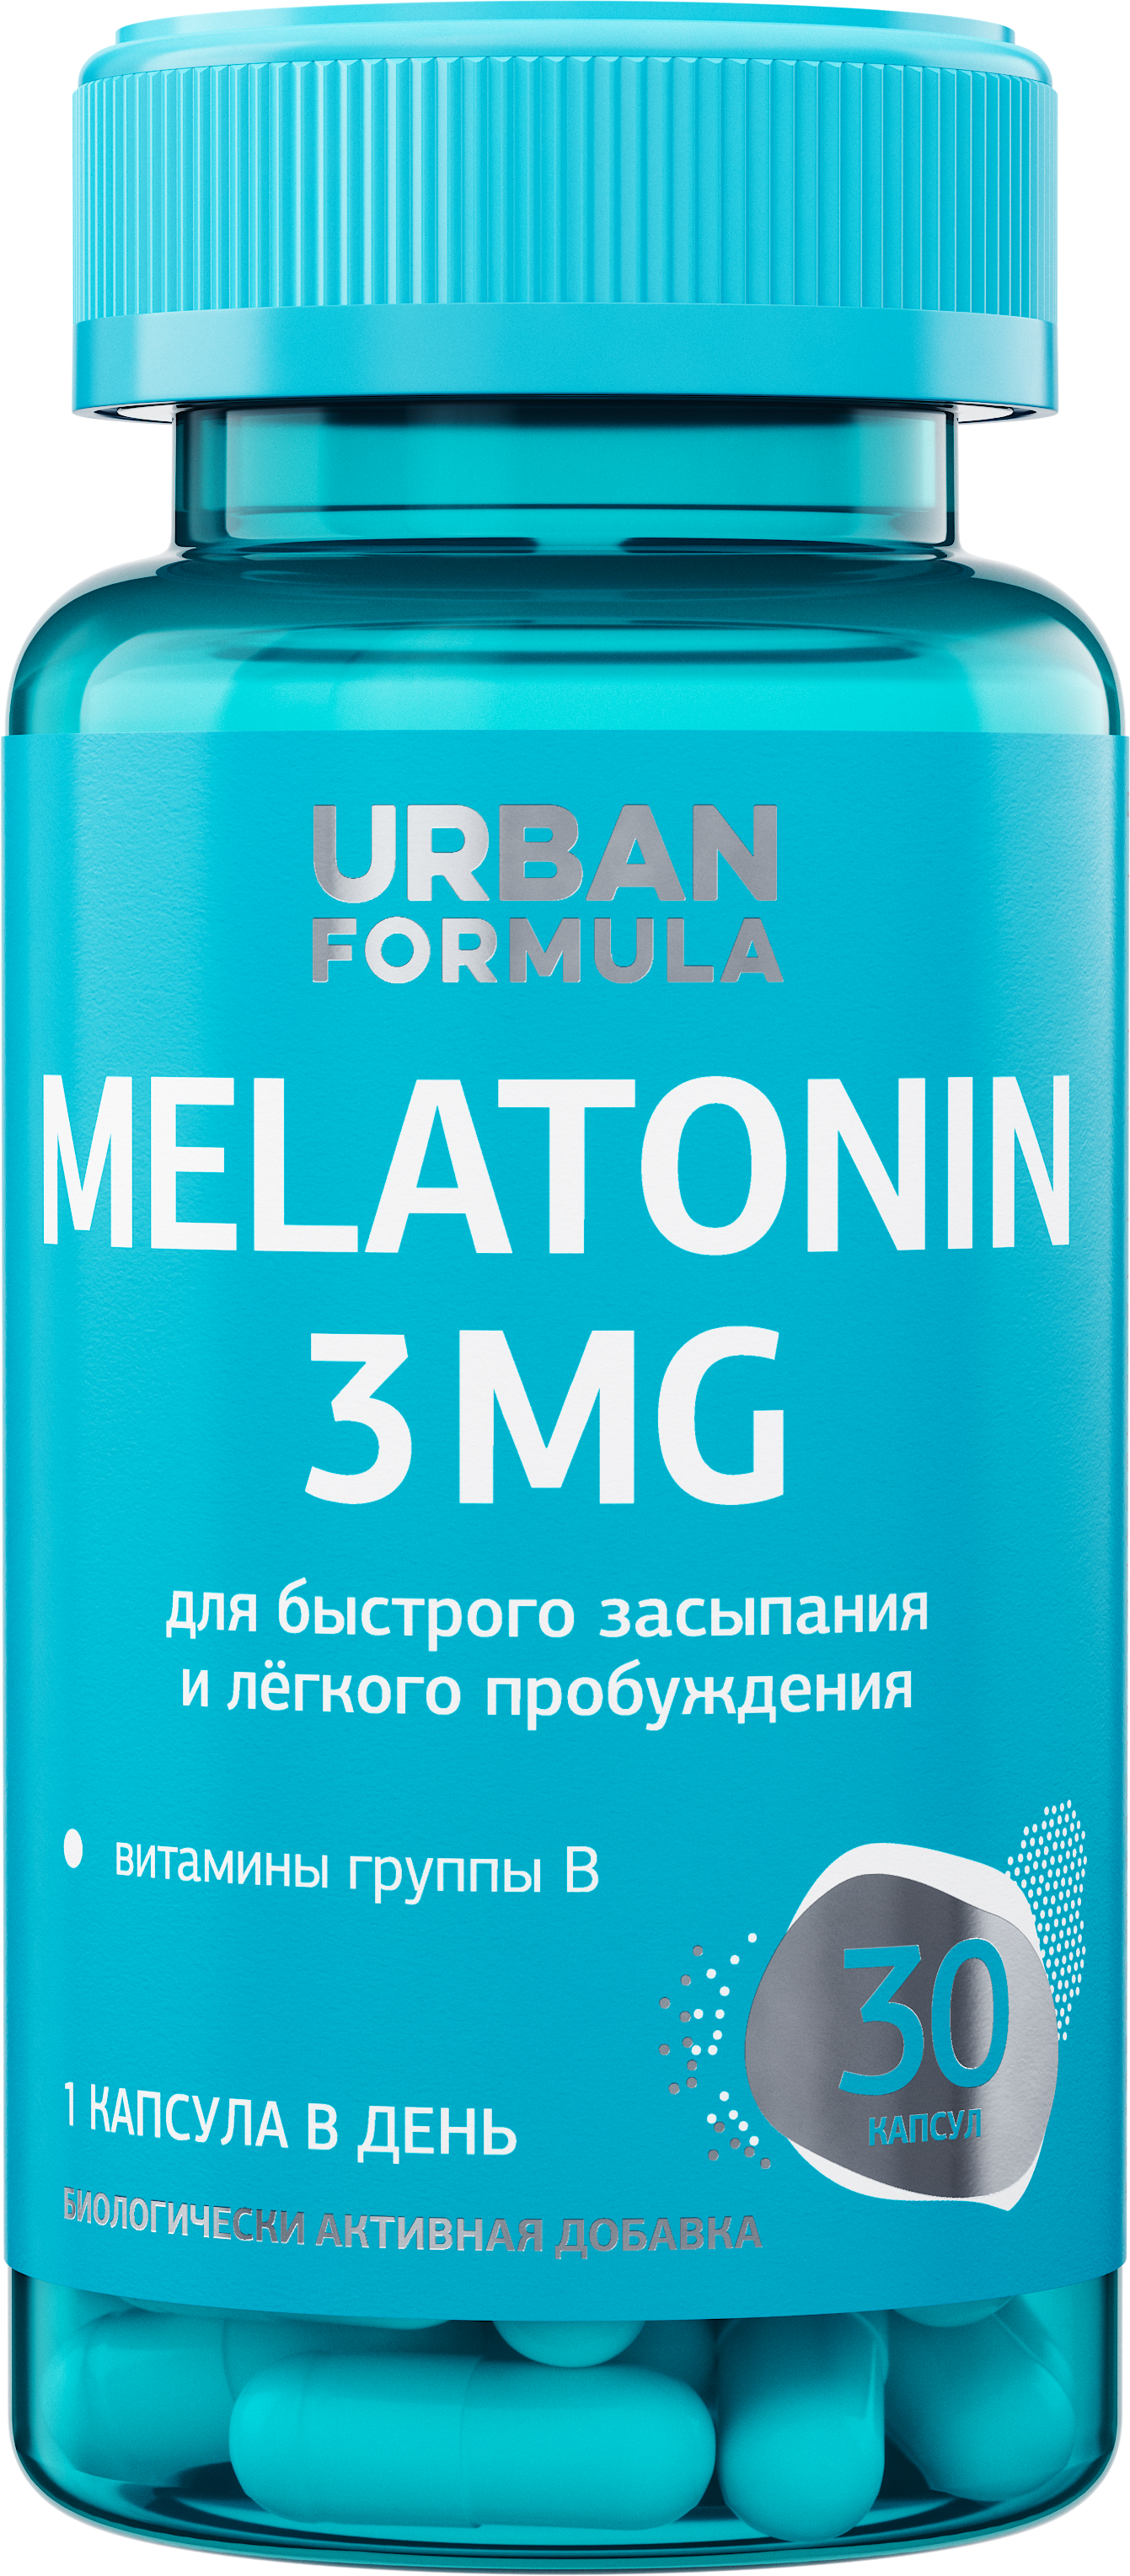 Melatonin 3 MG